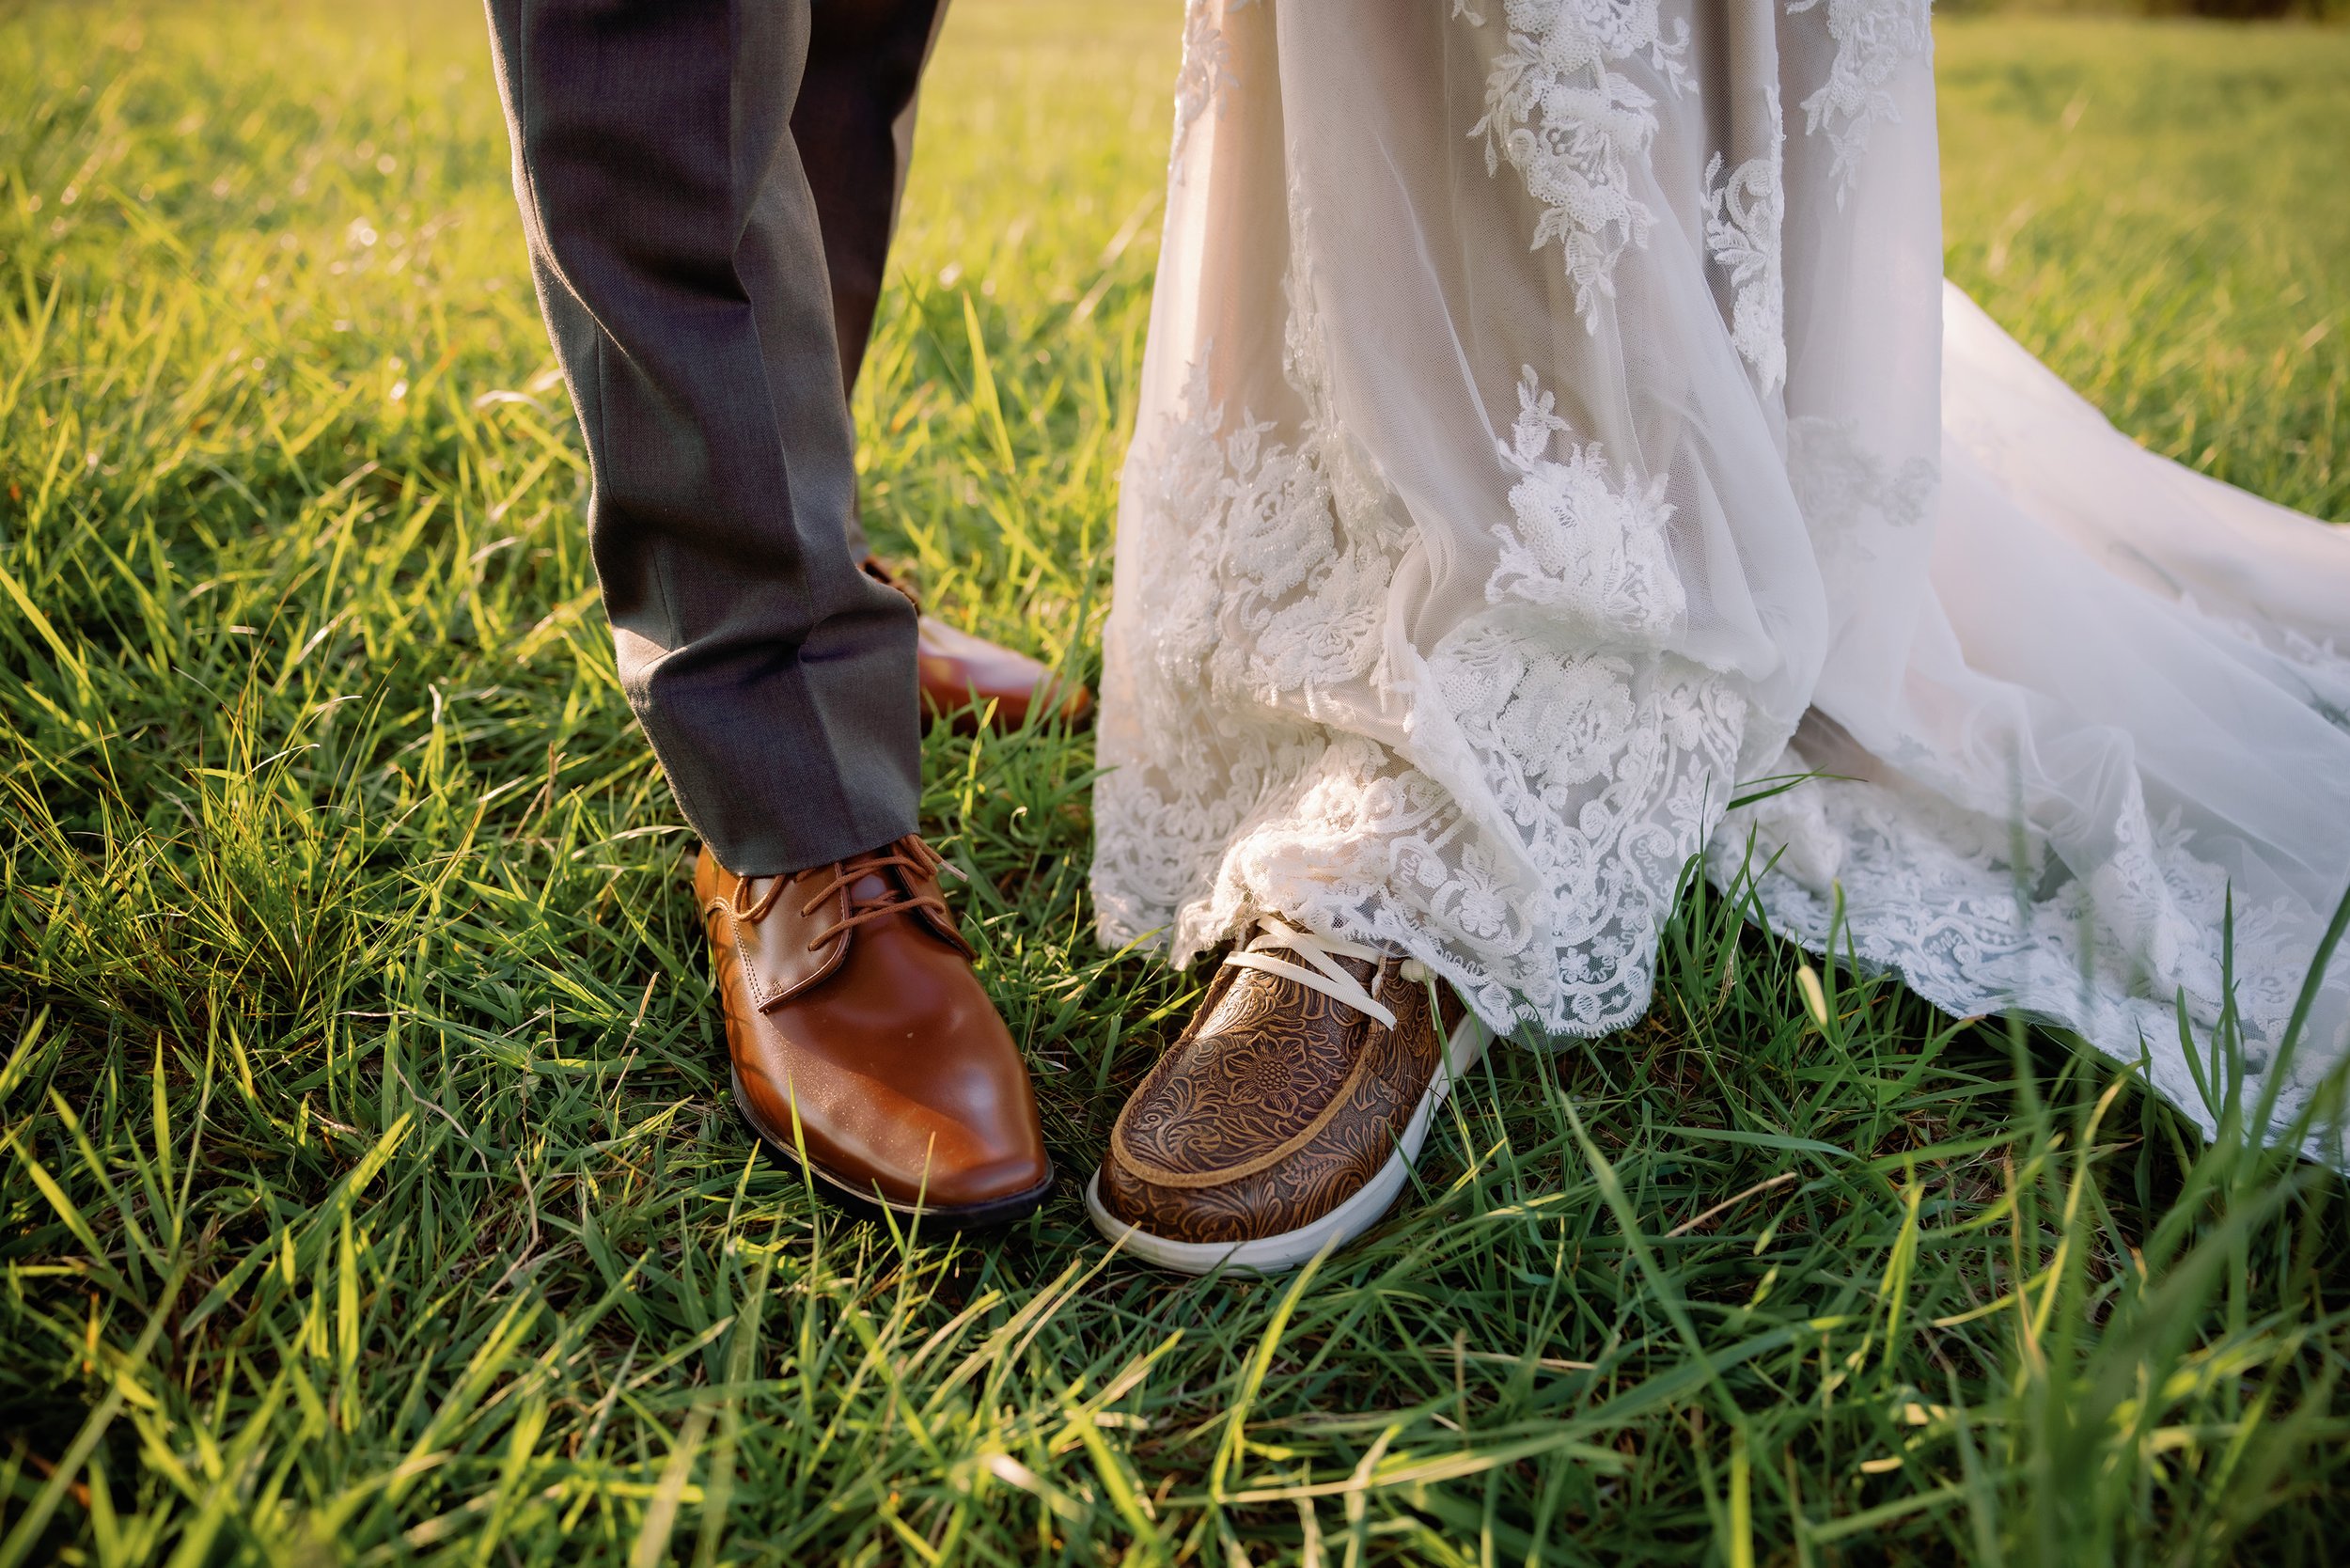 cades-cove-wedding-shoes.jpg